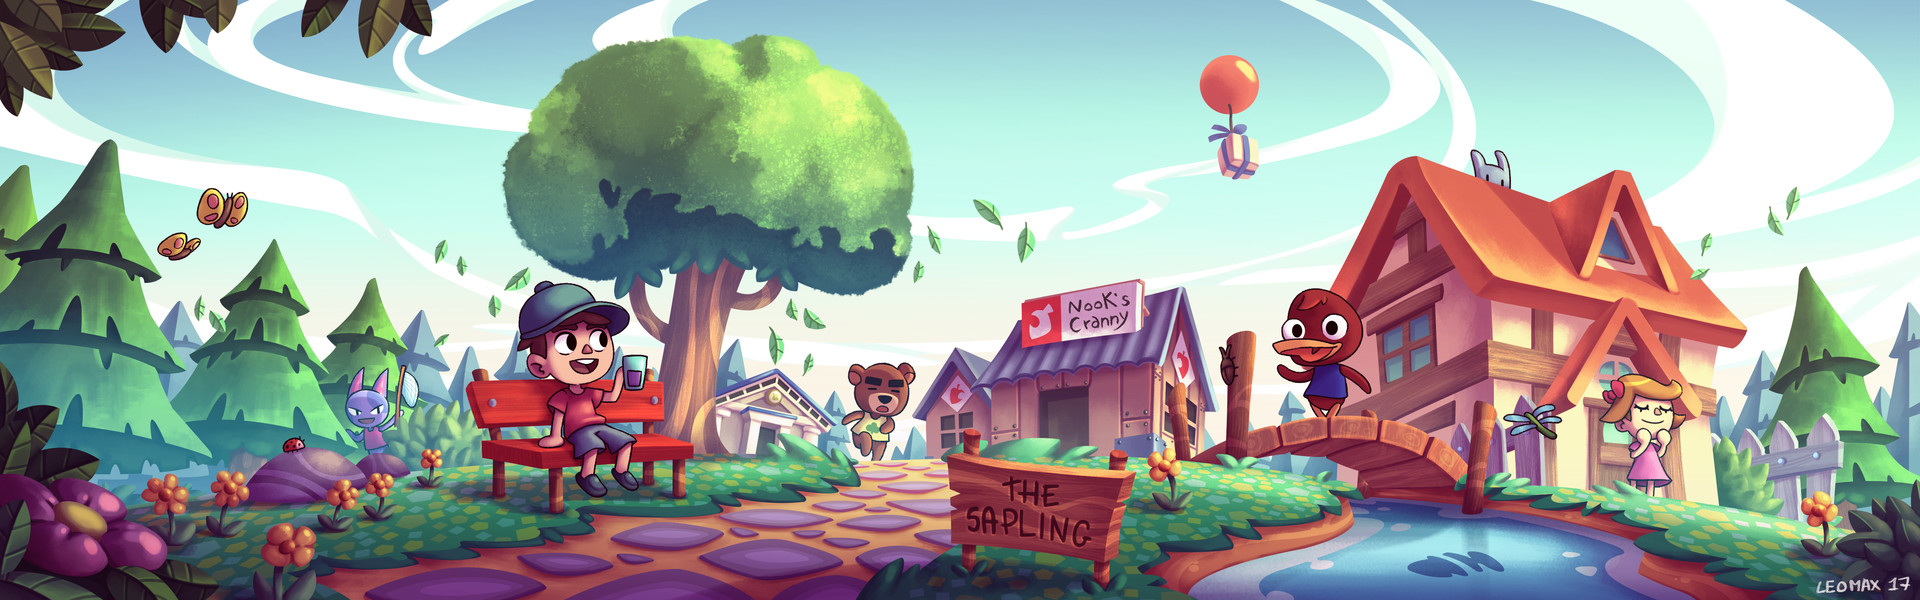 Massimo Di Leo - Animal Crossing Illustration